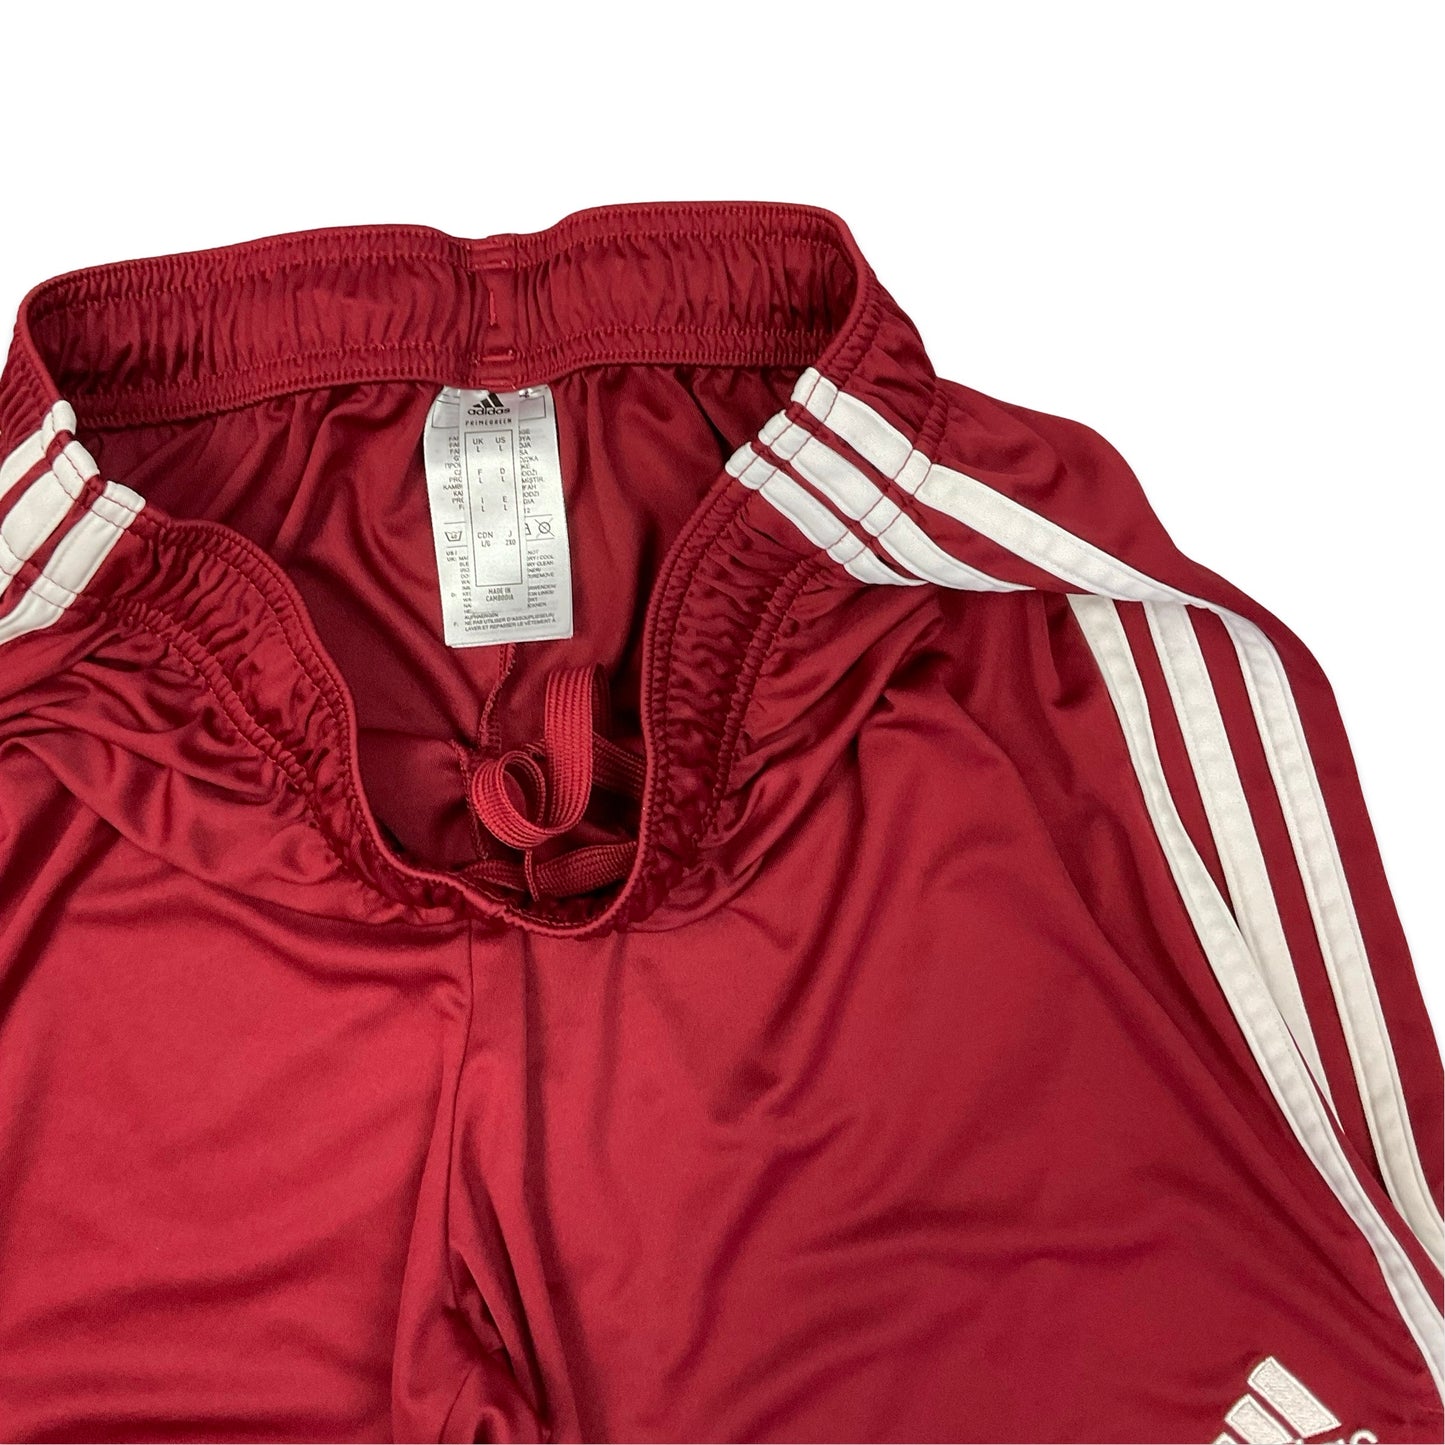 Adidas Maroon Bayern Munich Football Shorts S M